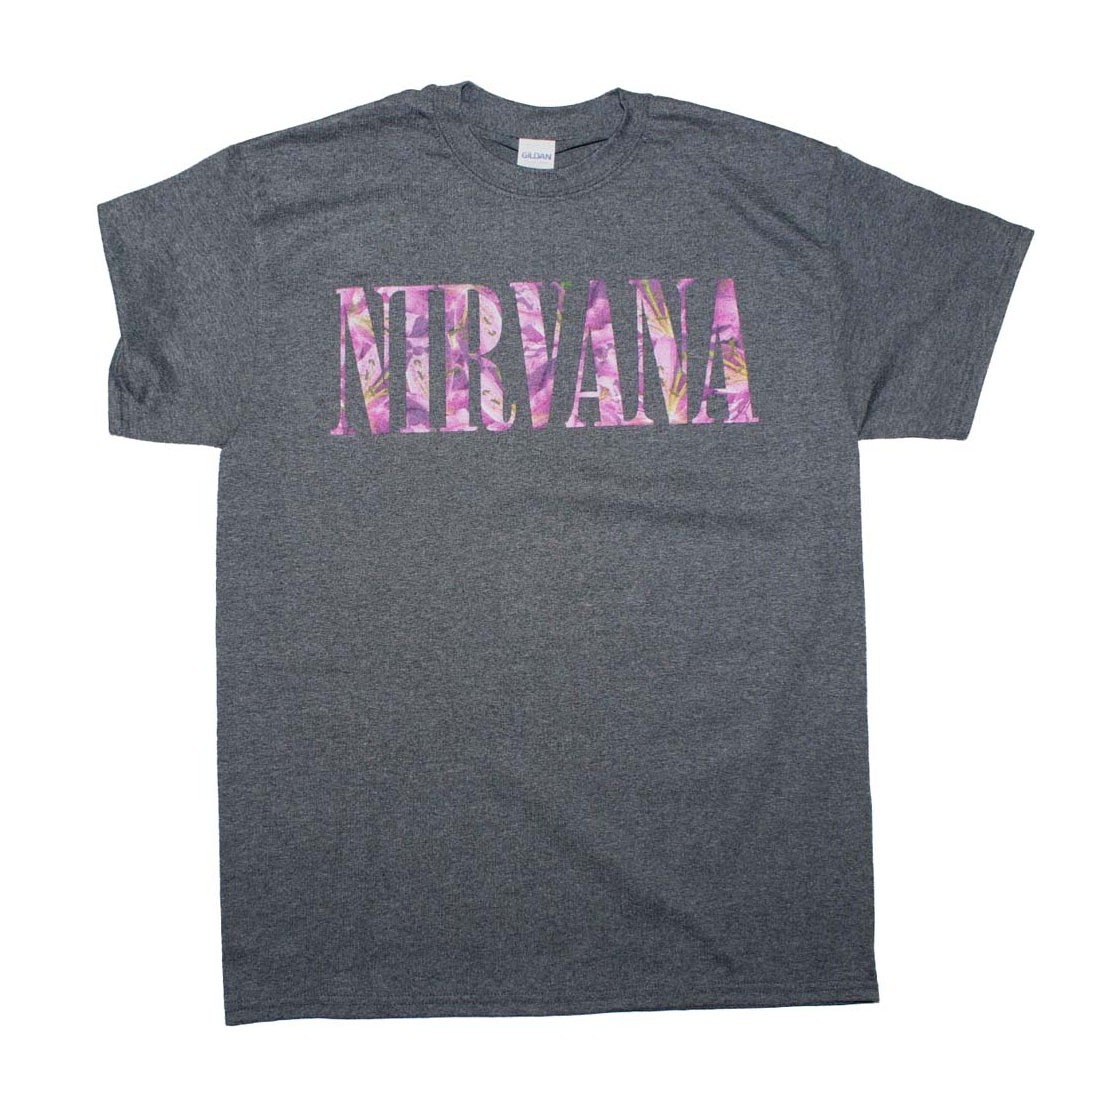 Nirvana t. Майка Nirvana. Fog Nirvana футболка серая. Серая майка Nirvana. Футболка July 19 Nirvana.